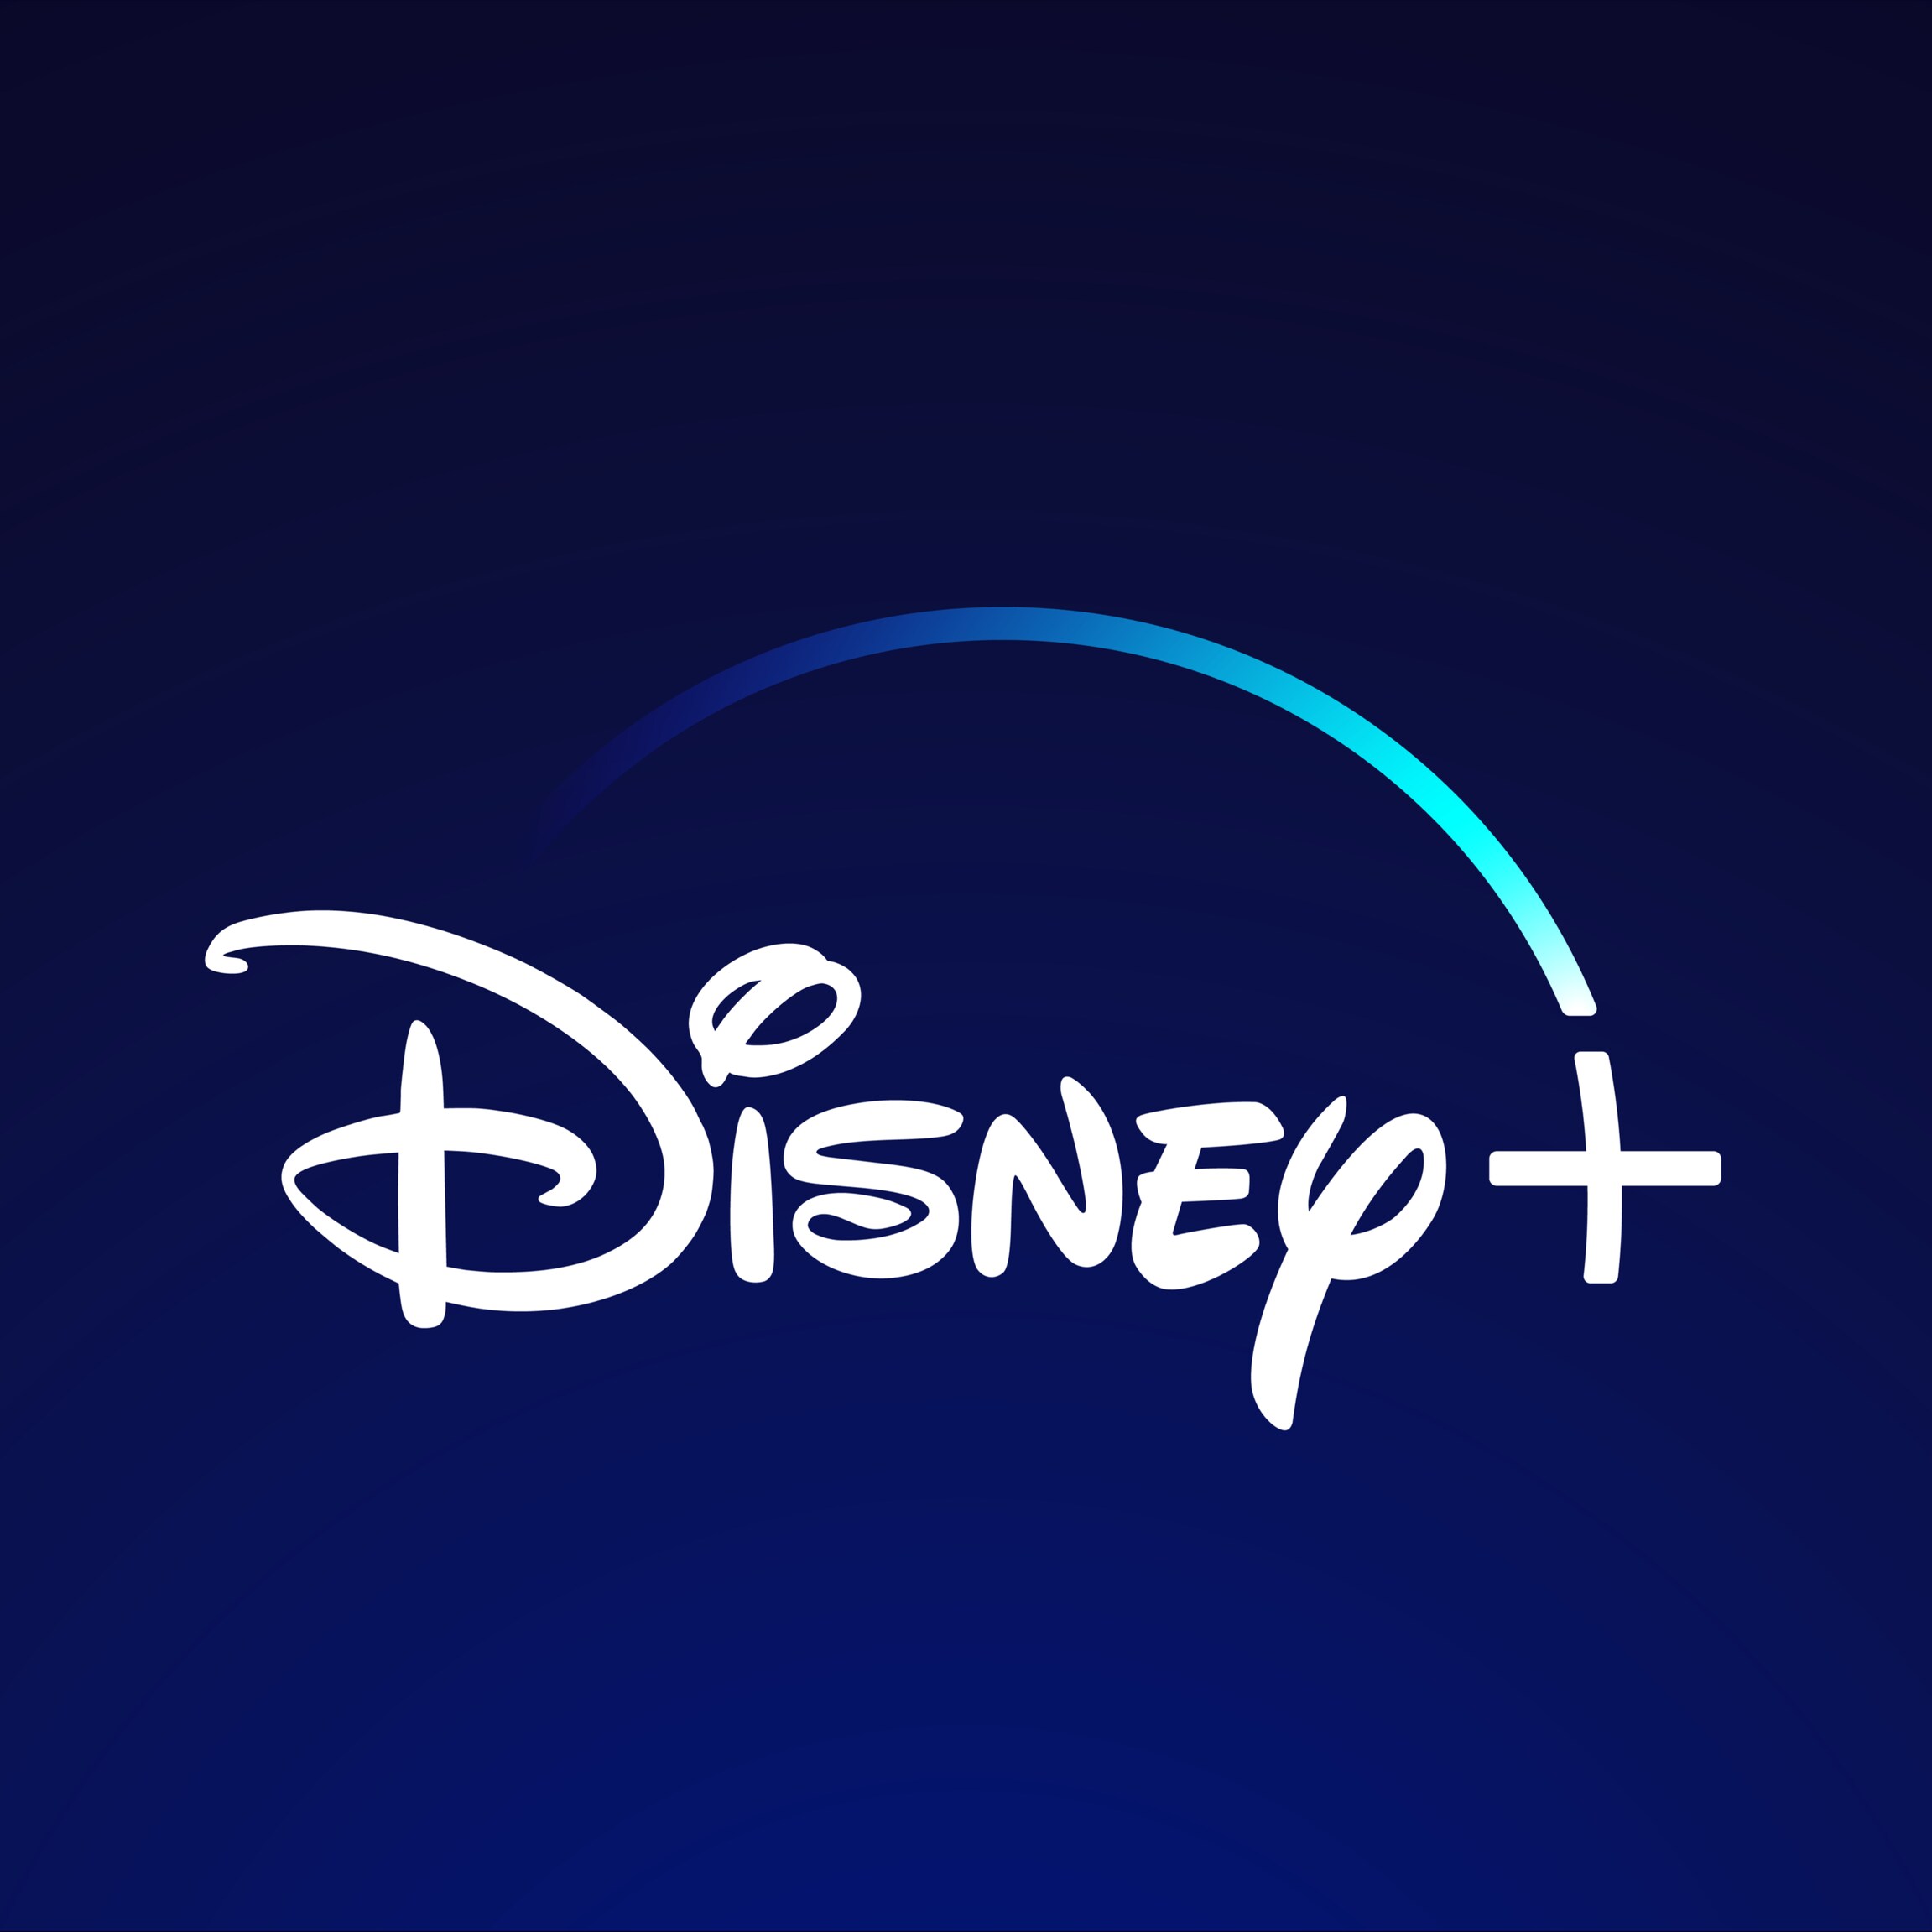 Next On Disney+ August 2020 DMED Media